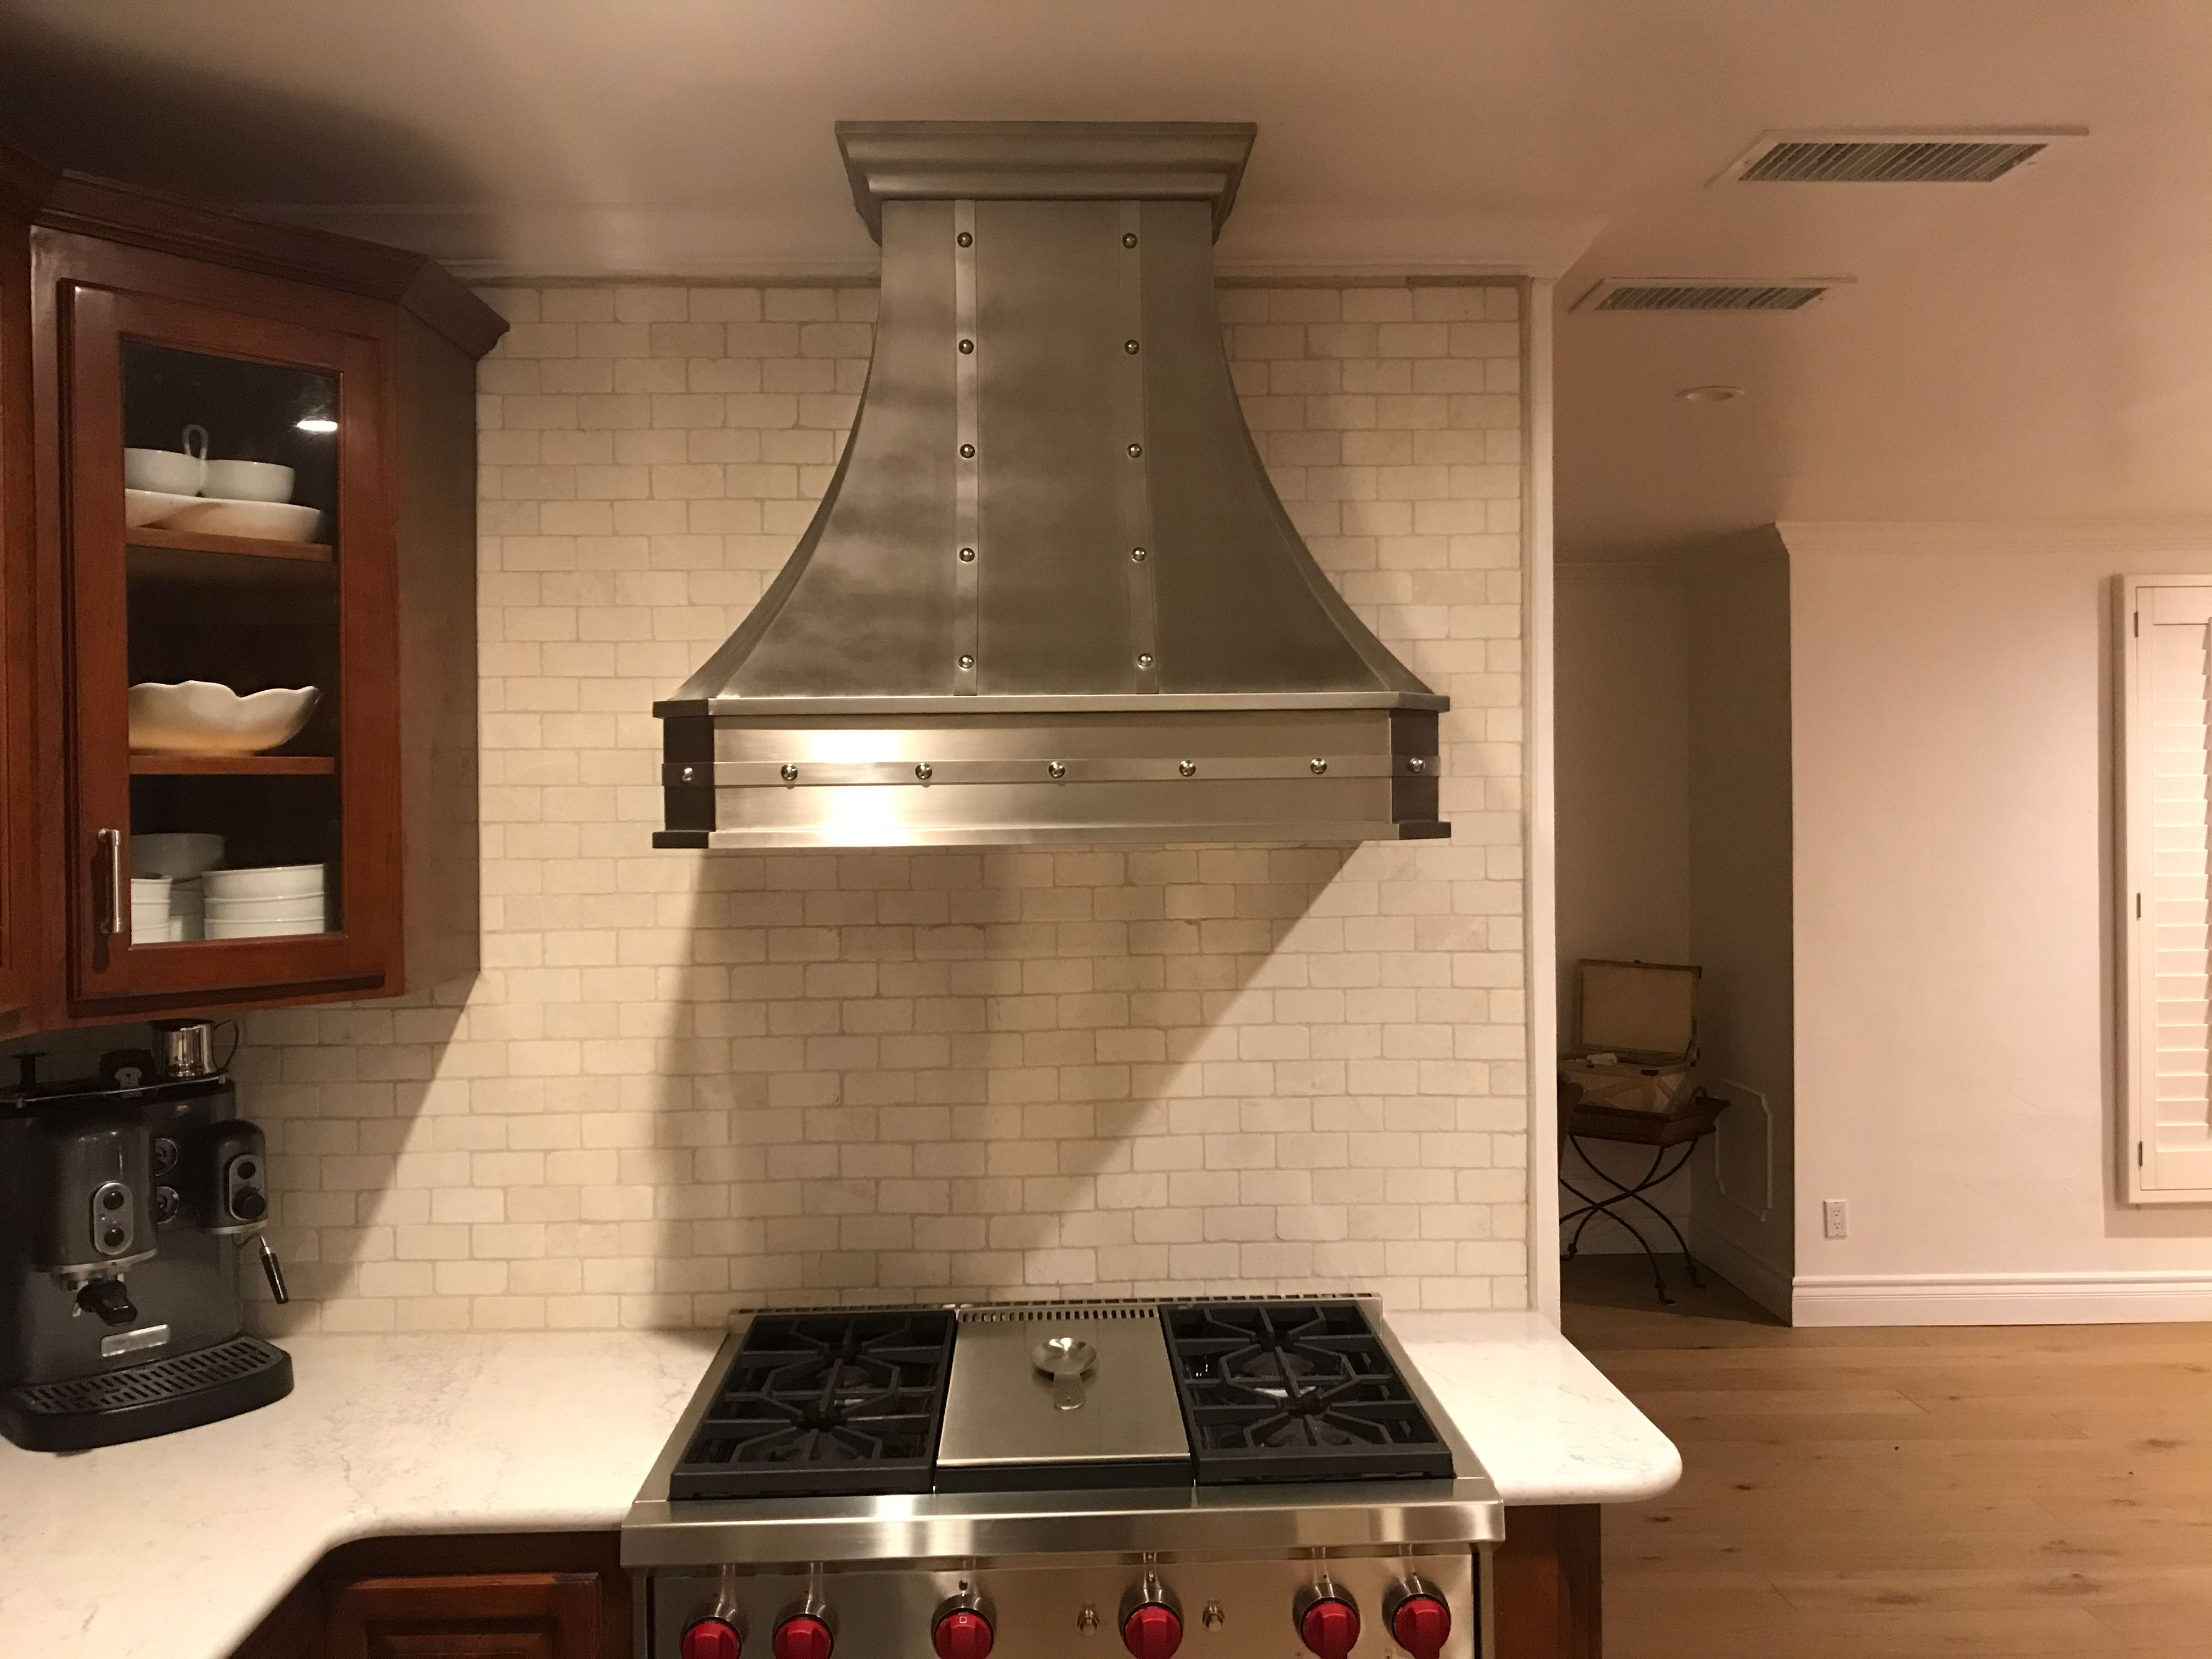 Kitchen design idea with range hood and rich brown kitchen cabinets, white kitchen countertops and brick backsplash